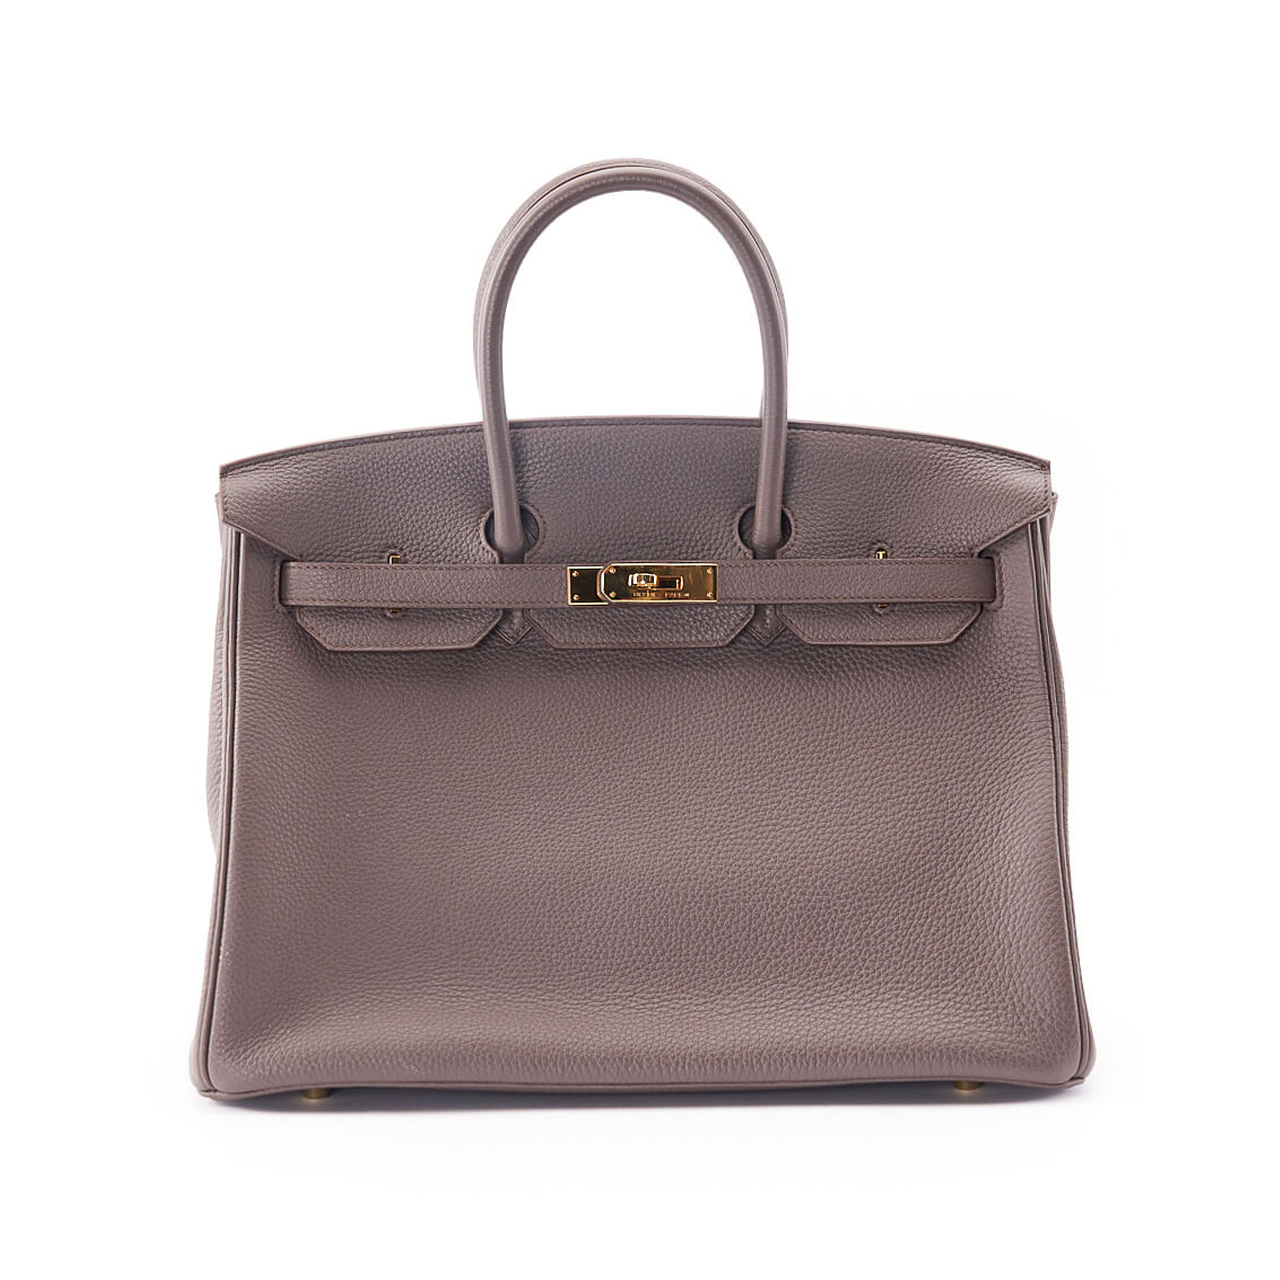 Louis Vuitton - Authenticated Purse - Leather Ecru Tartan for Women, Never Worn